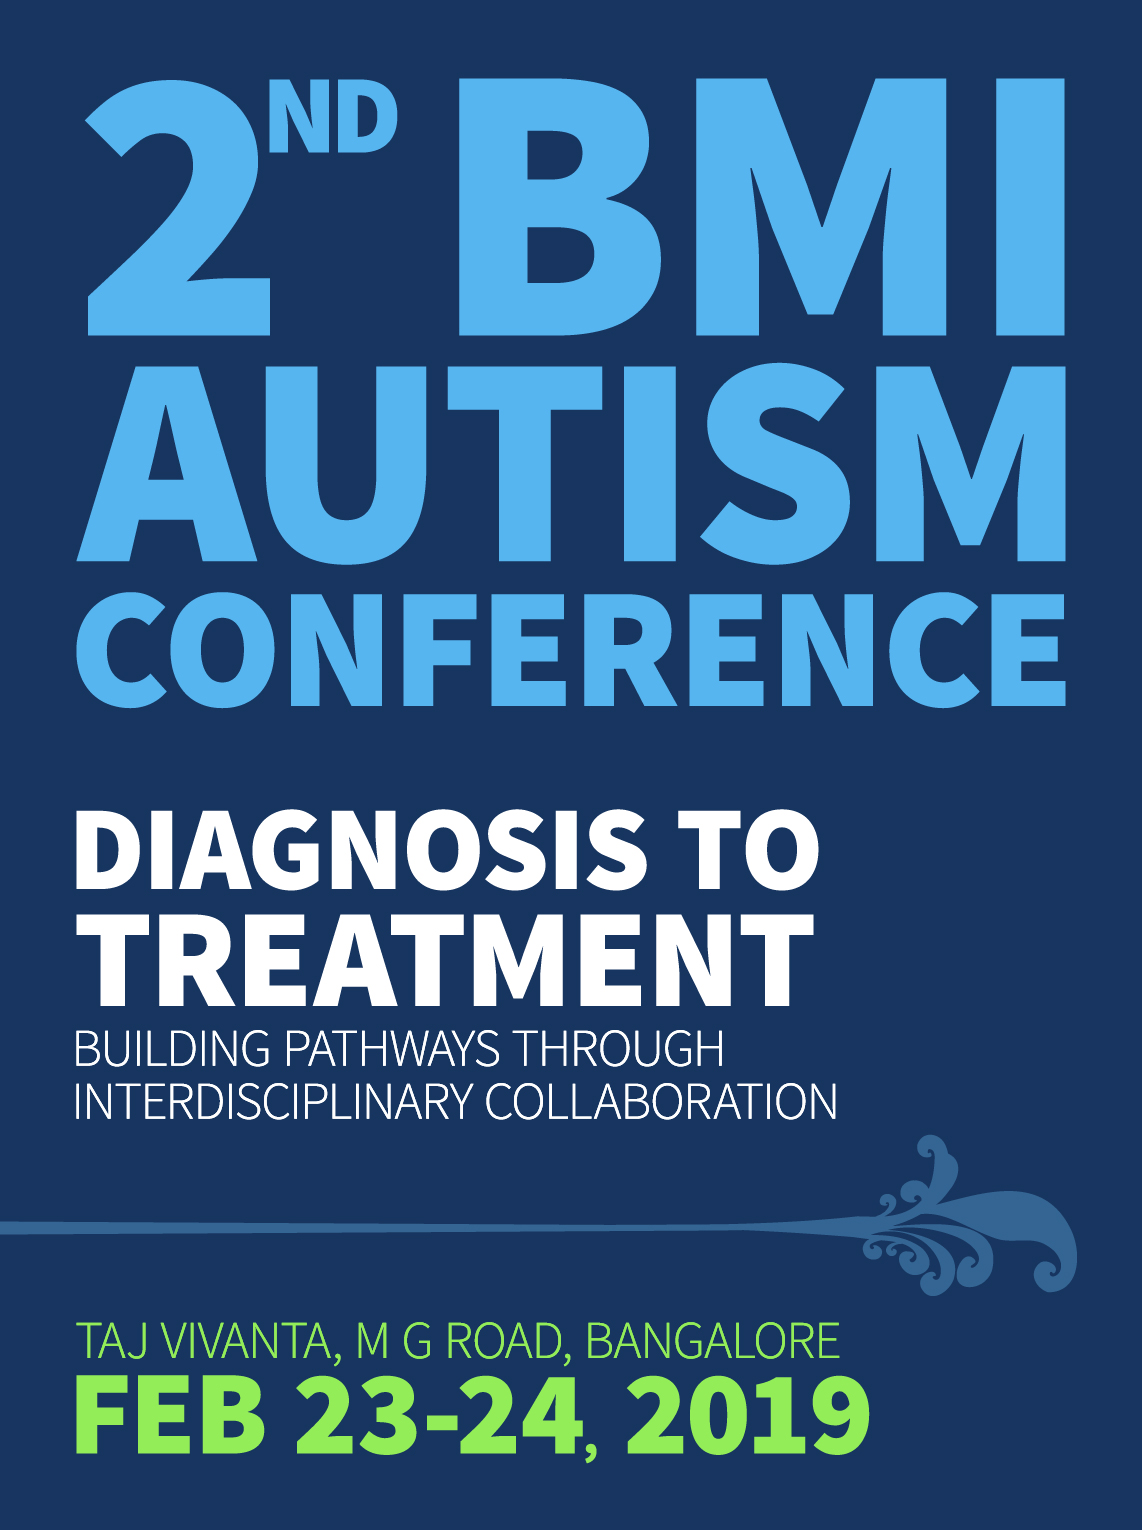 International Autism Conference - Diagnosis to Treatment. Pediatrics and evidence based treatments on one platform. February 23-24, 2019. Taj Vivanta, MG Road, Bangalore, India